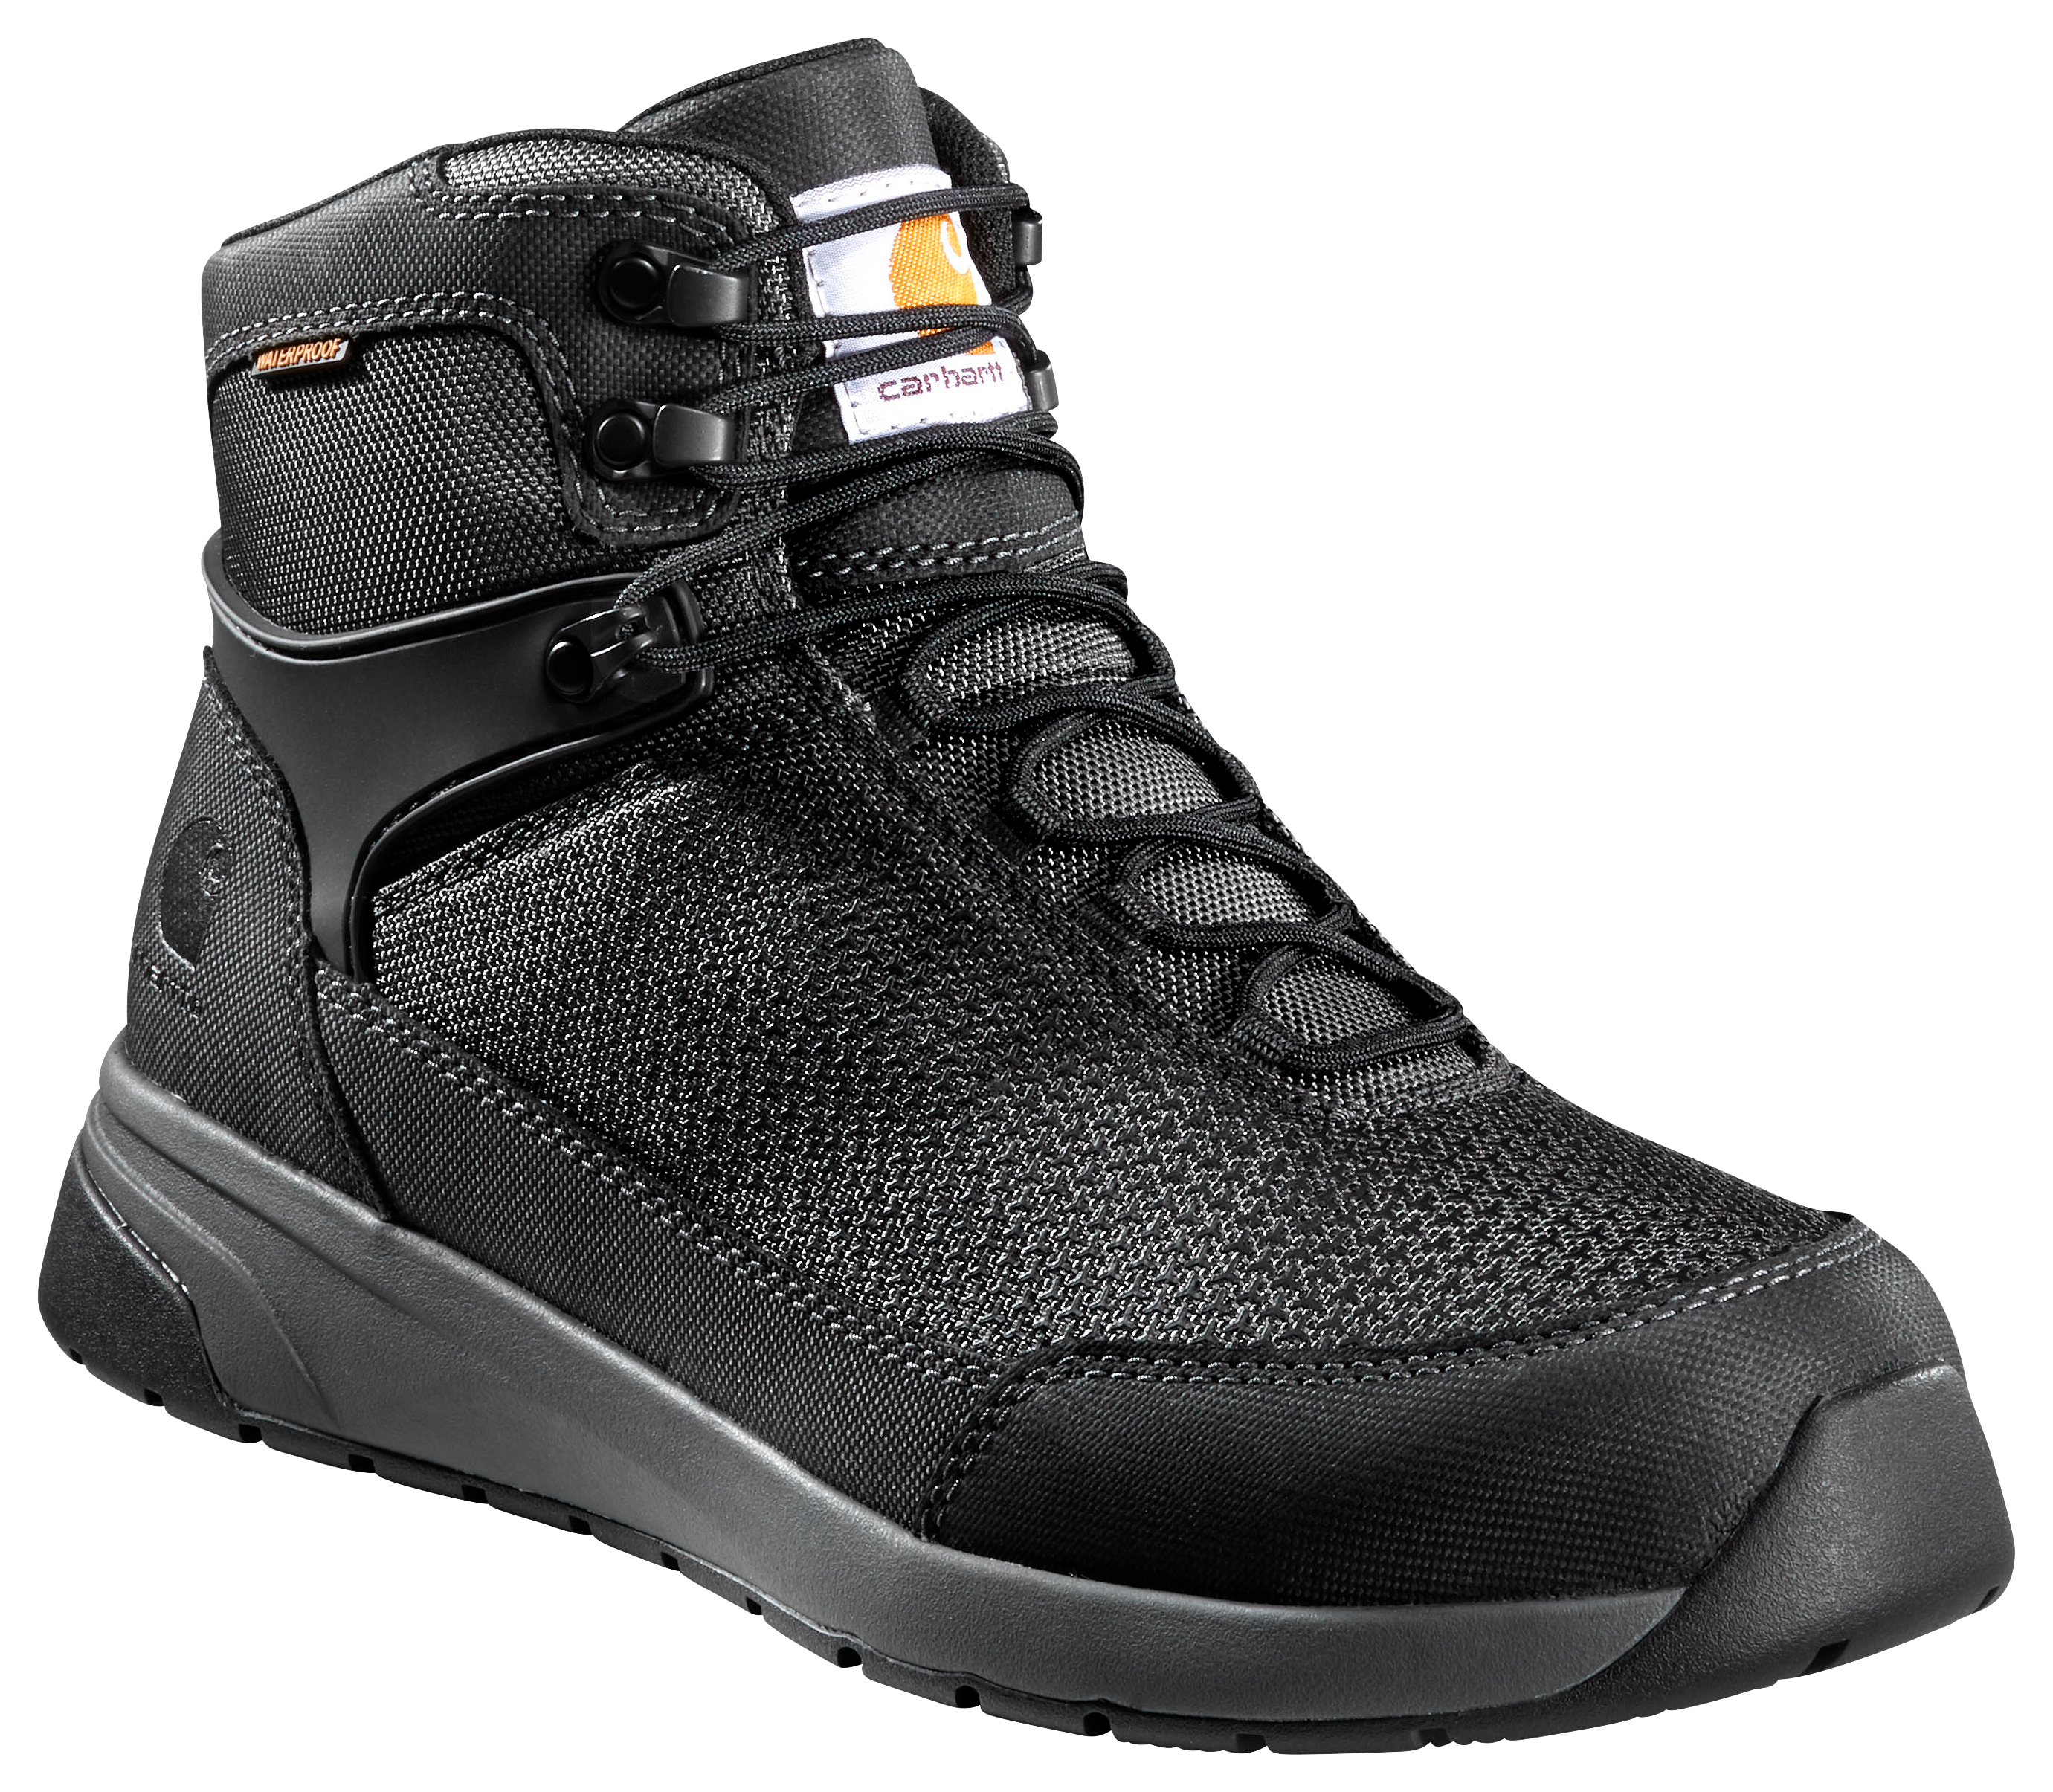 Carhartt Force 6"" Nano Composite-Toe Work Boots for Men - Black - 9M